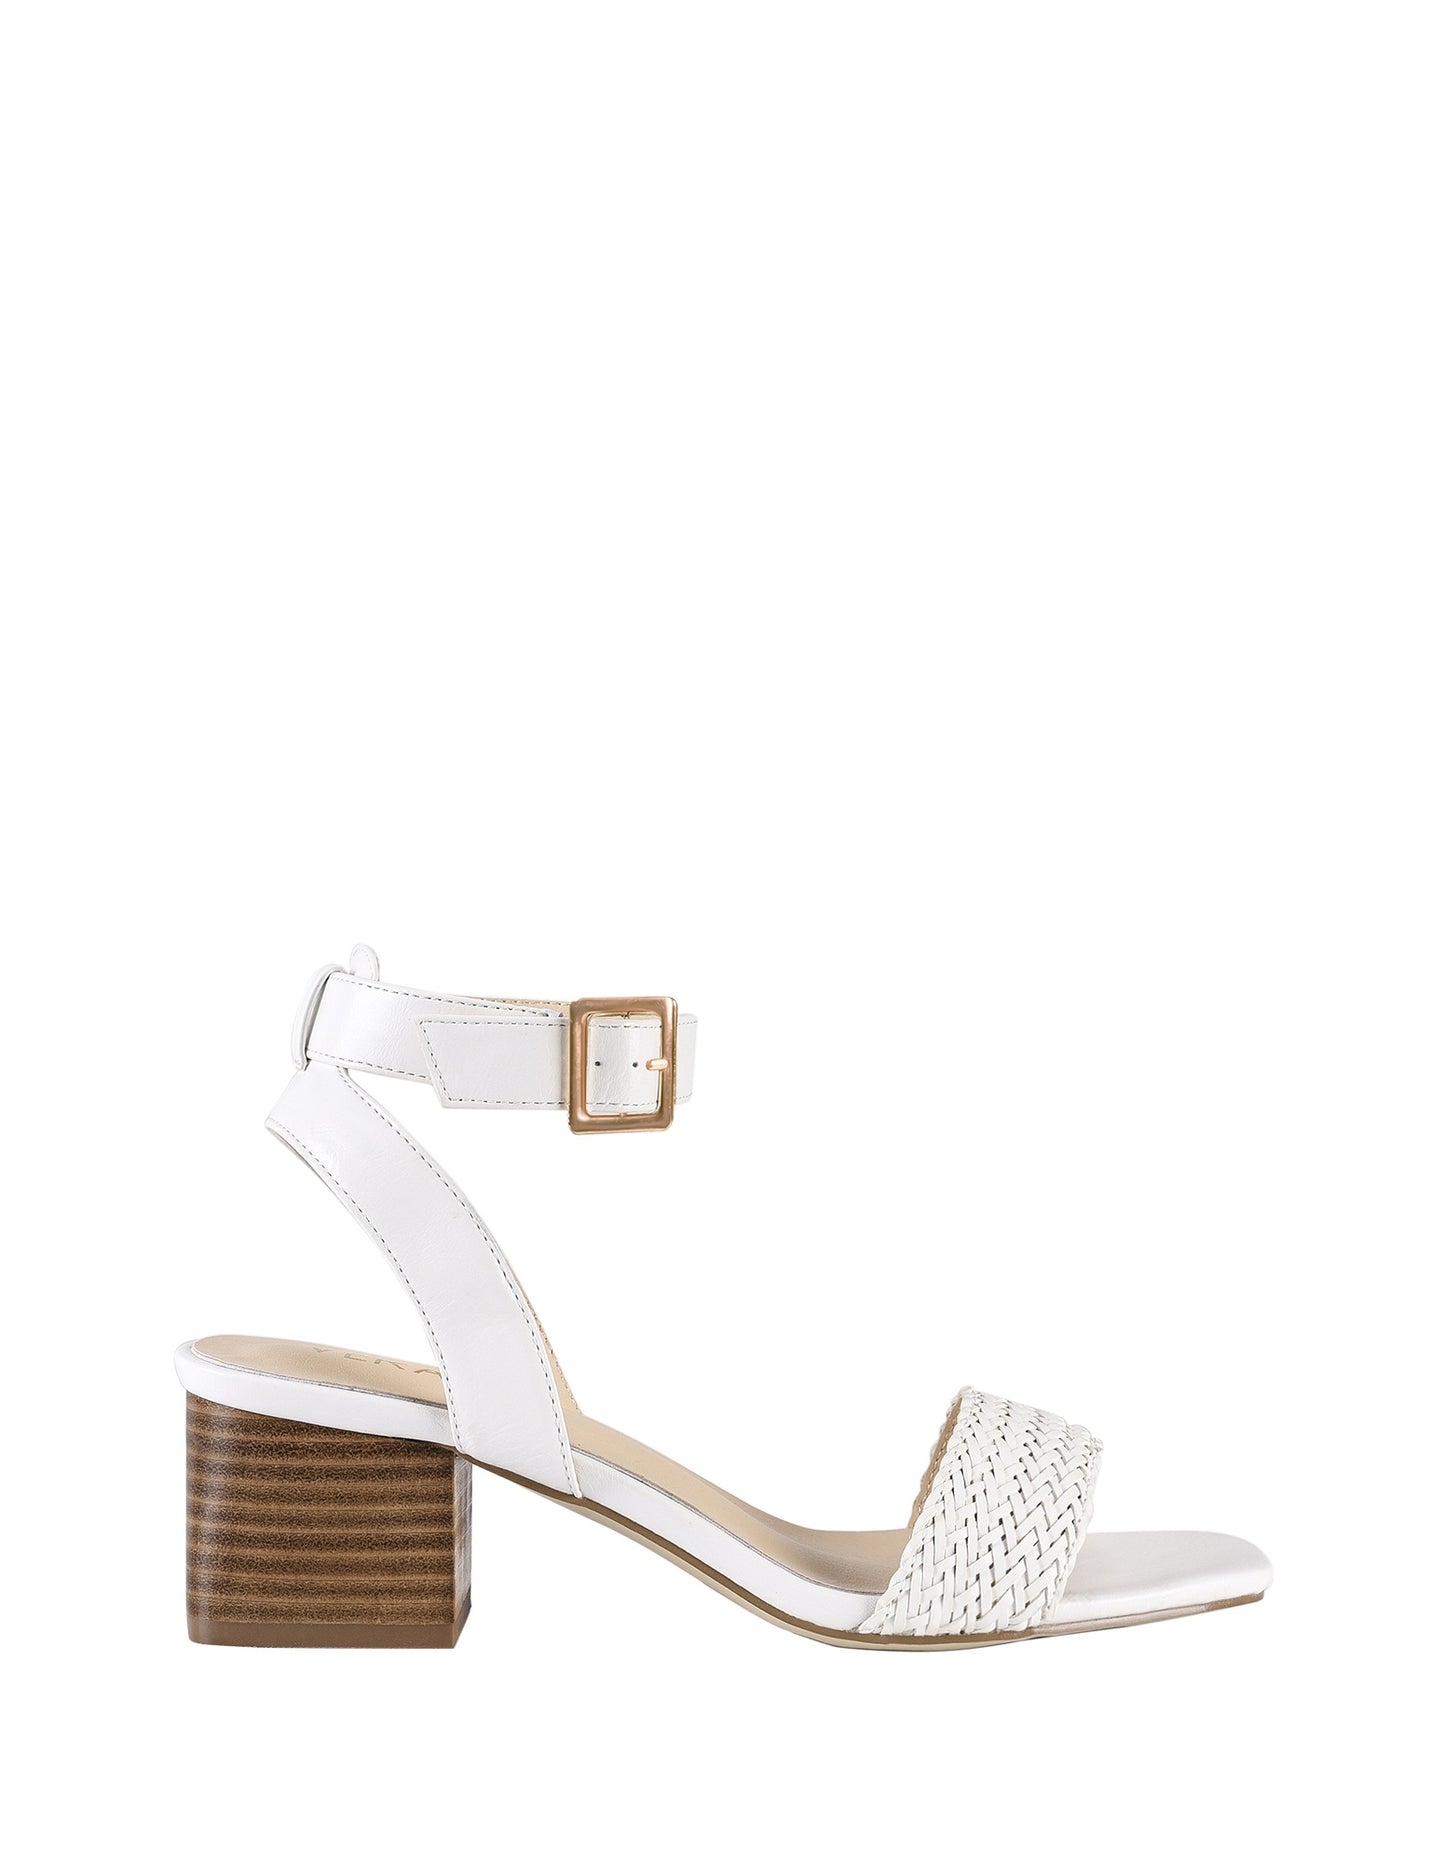 Elly block heel - white weave